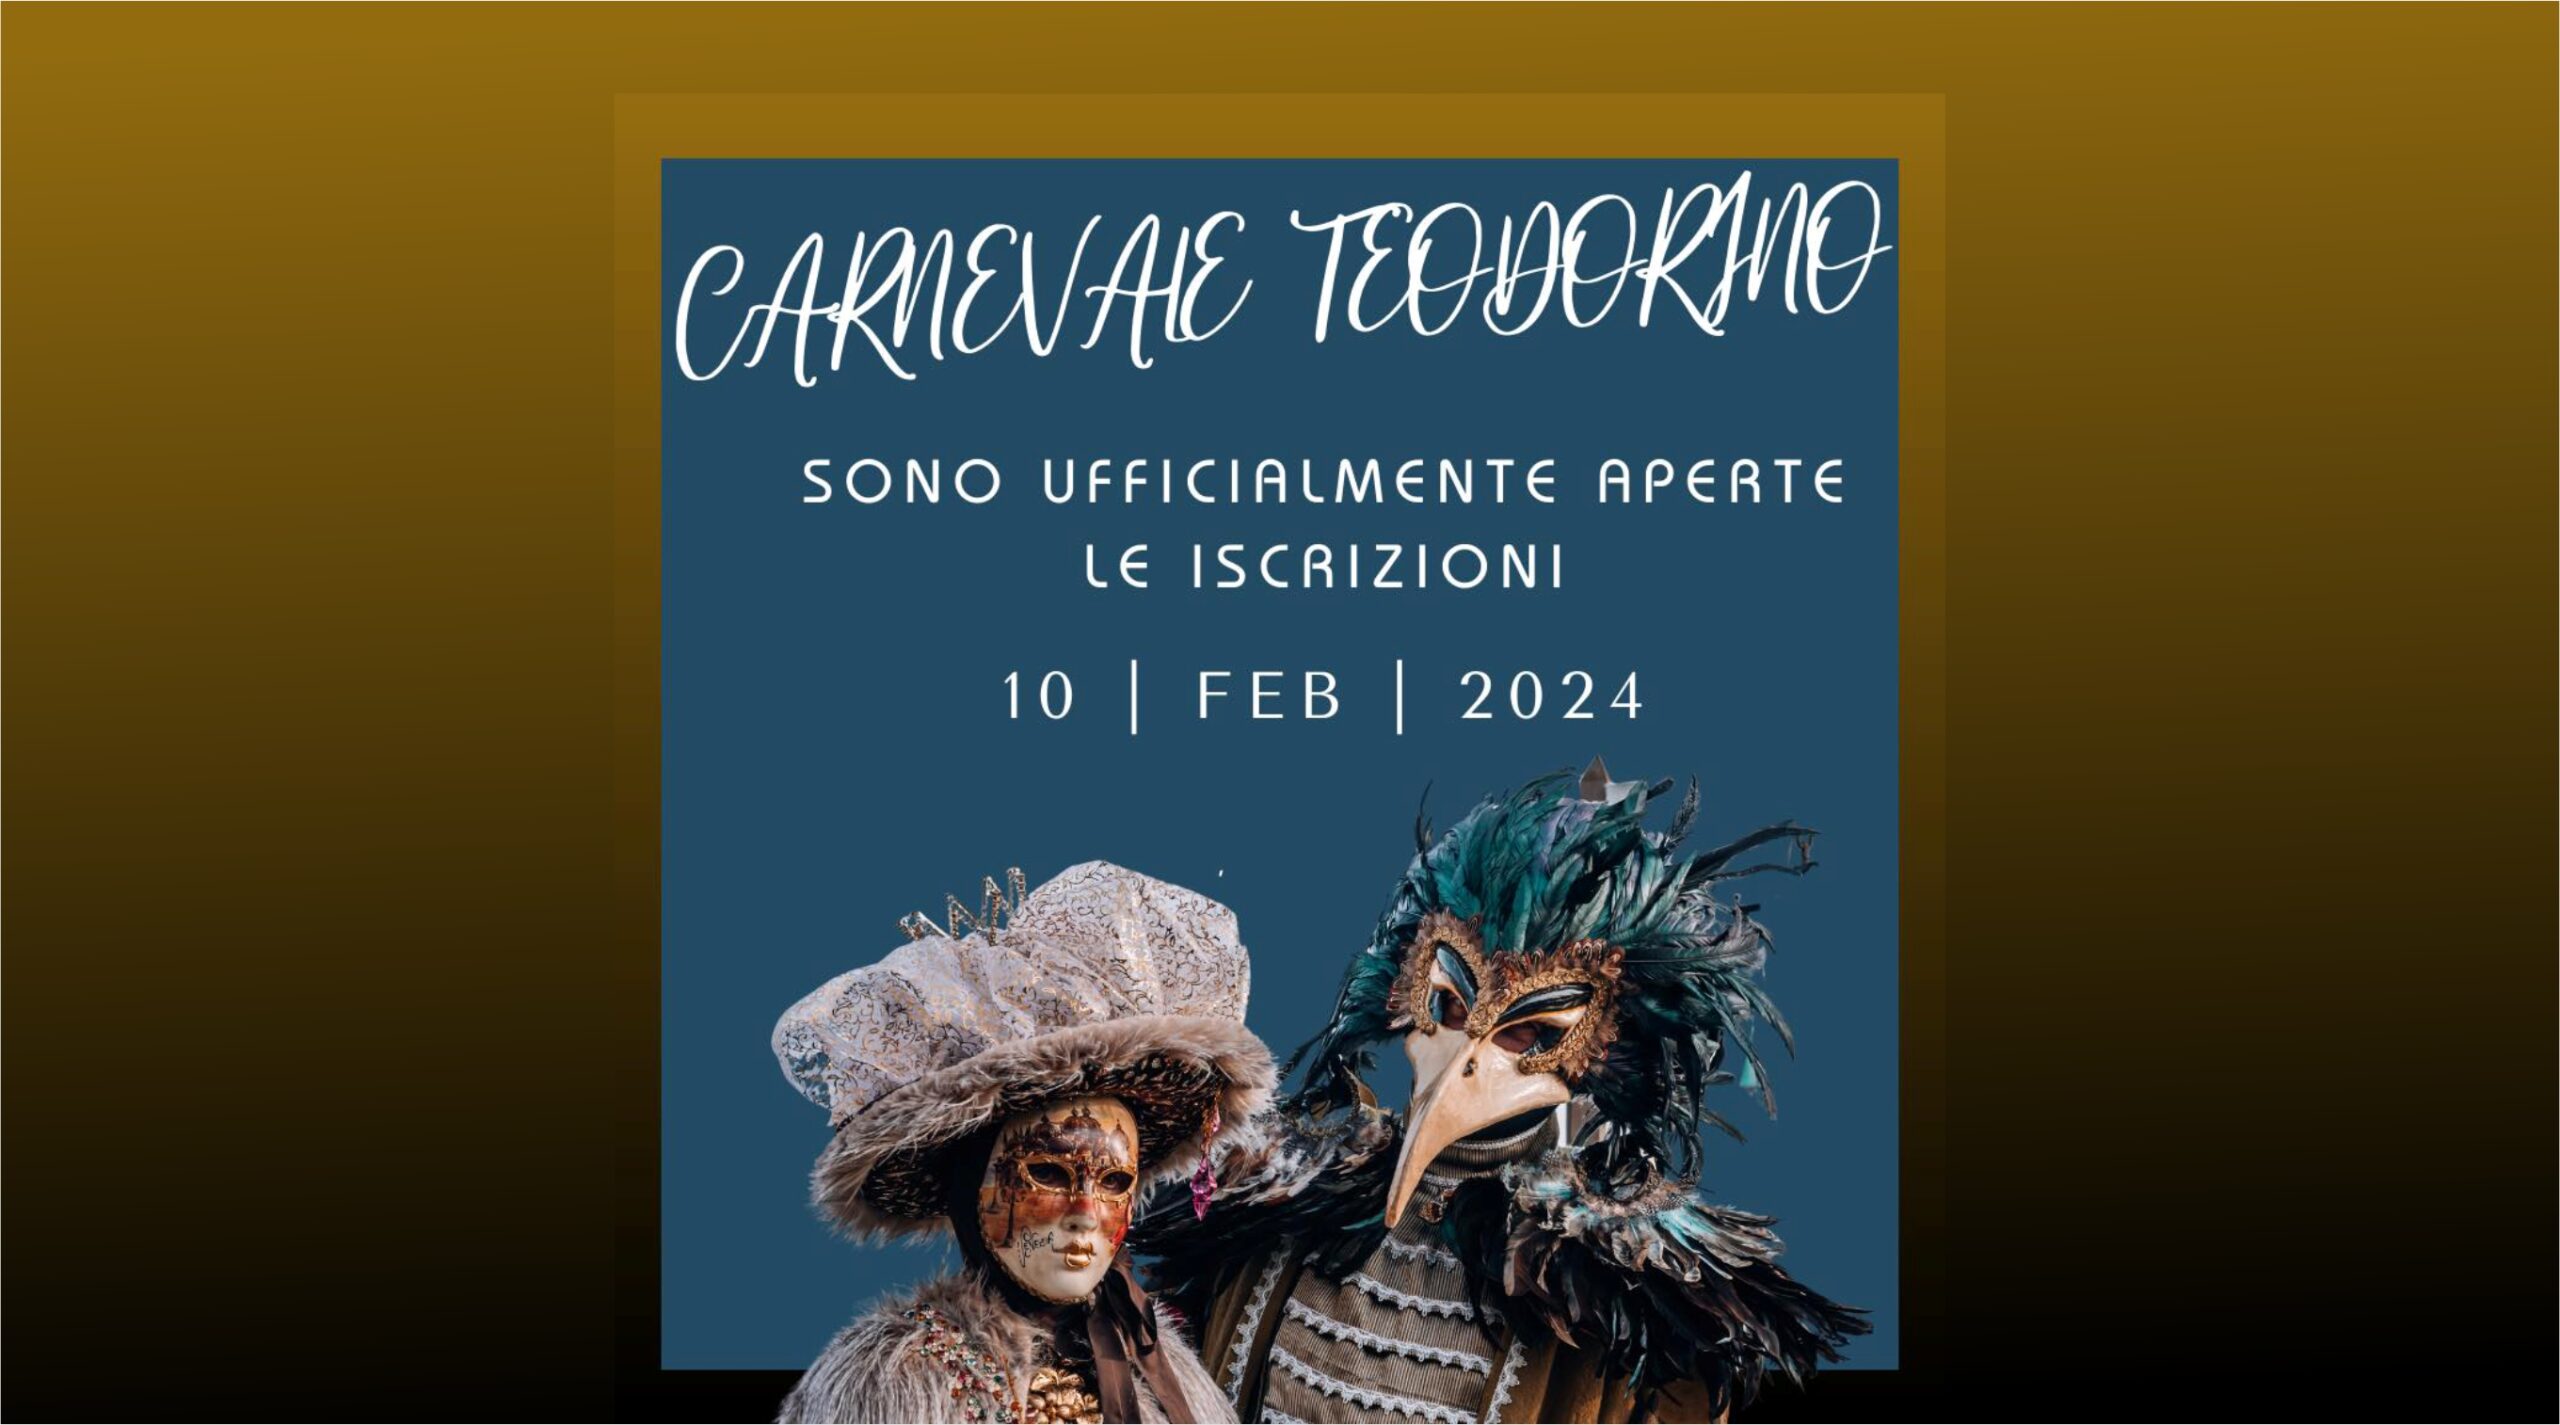  Carnevale Teodorino 2024